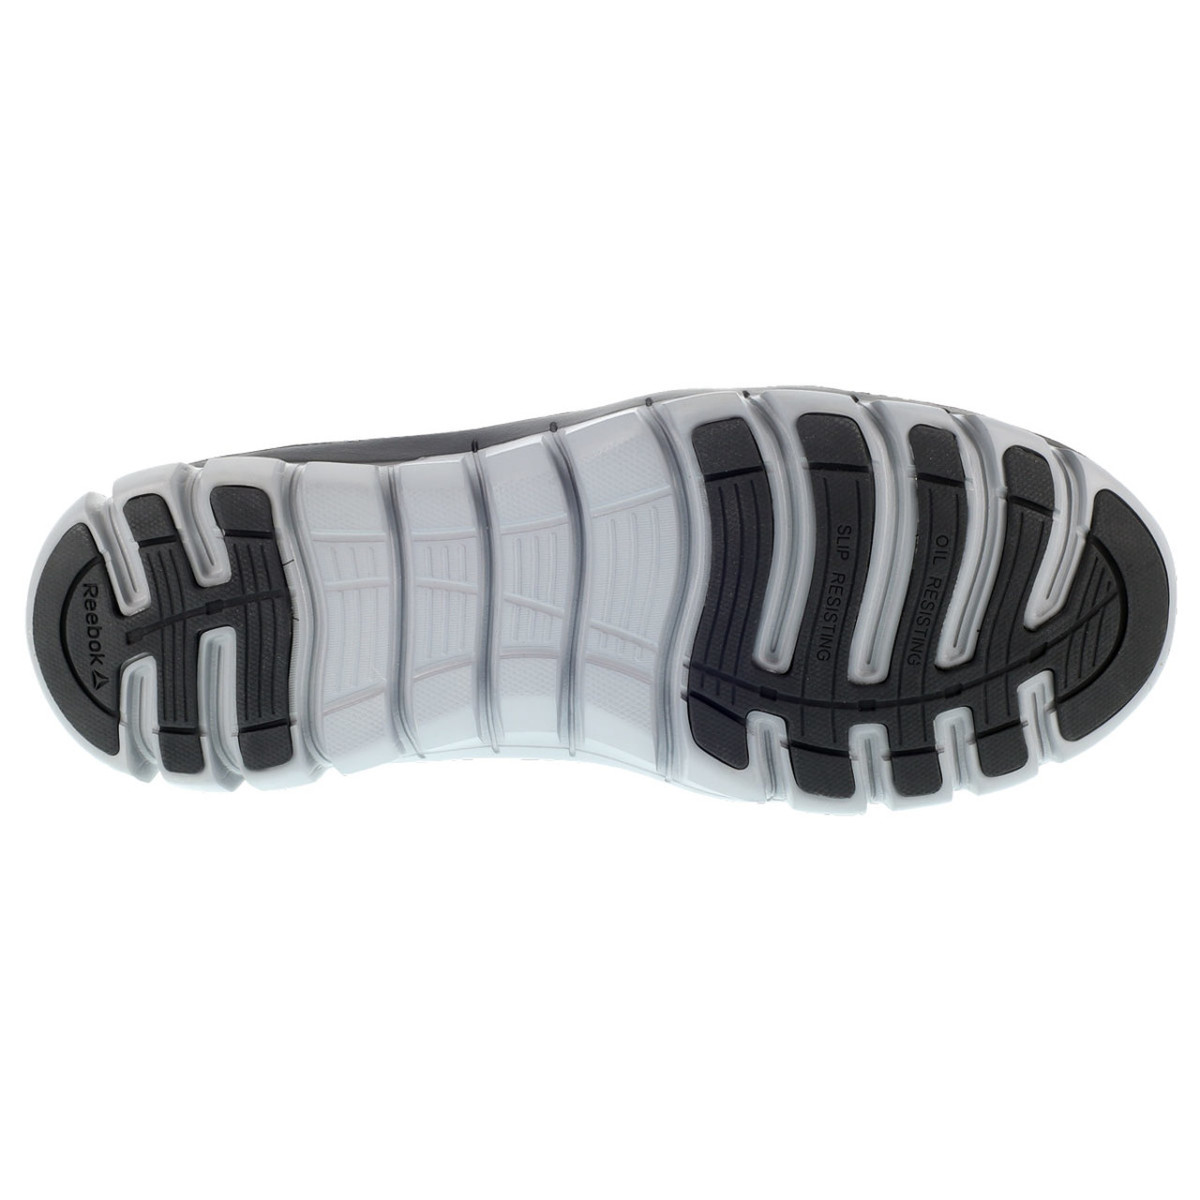 Reebok Sublite Cushion SD Alloy Toe Shoes - RB4141